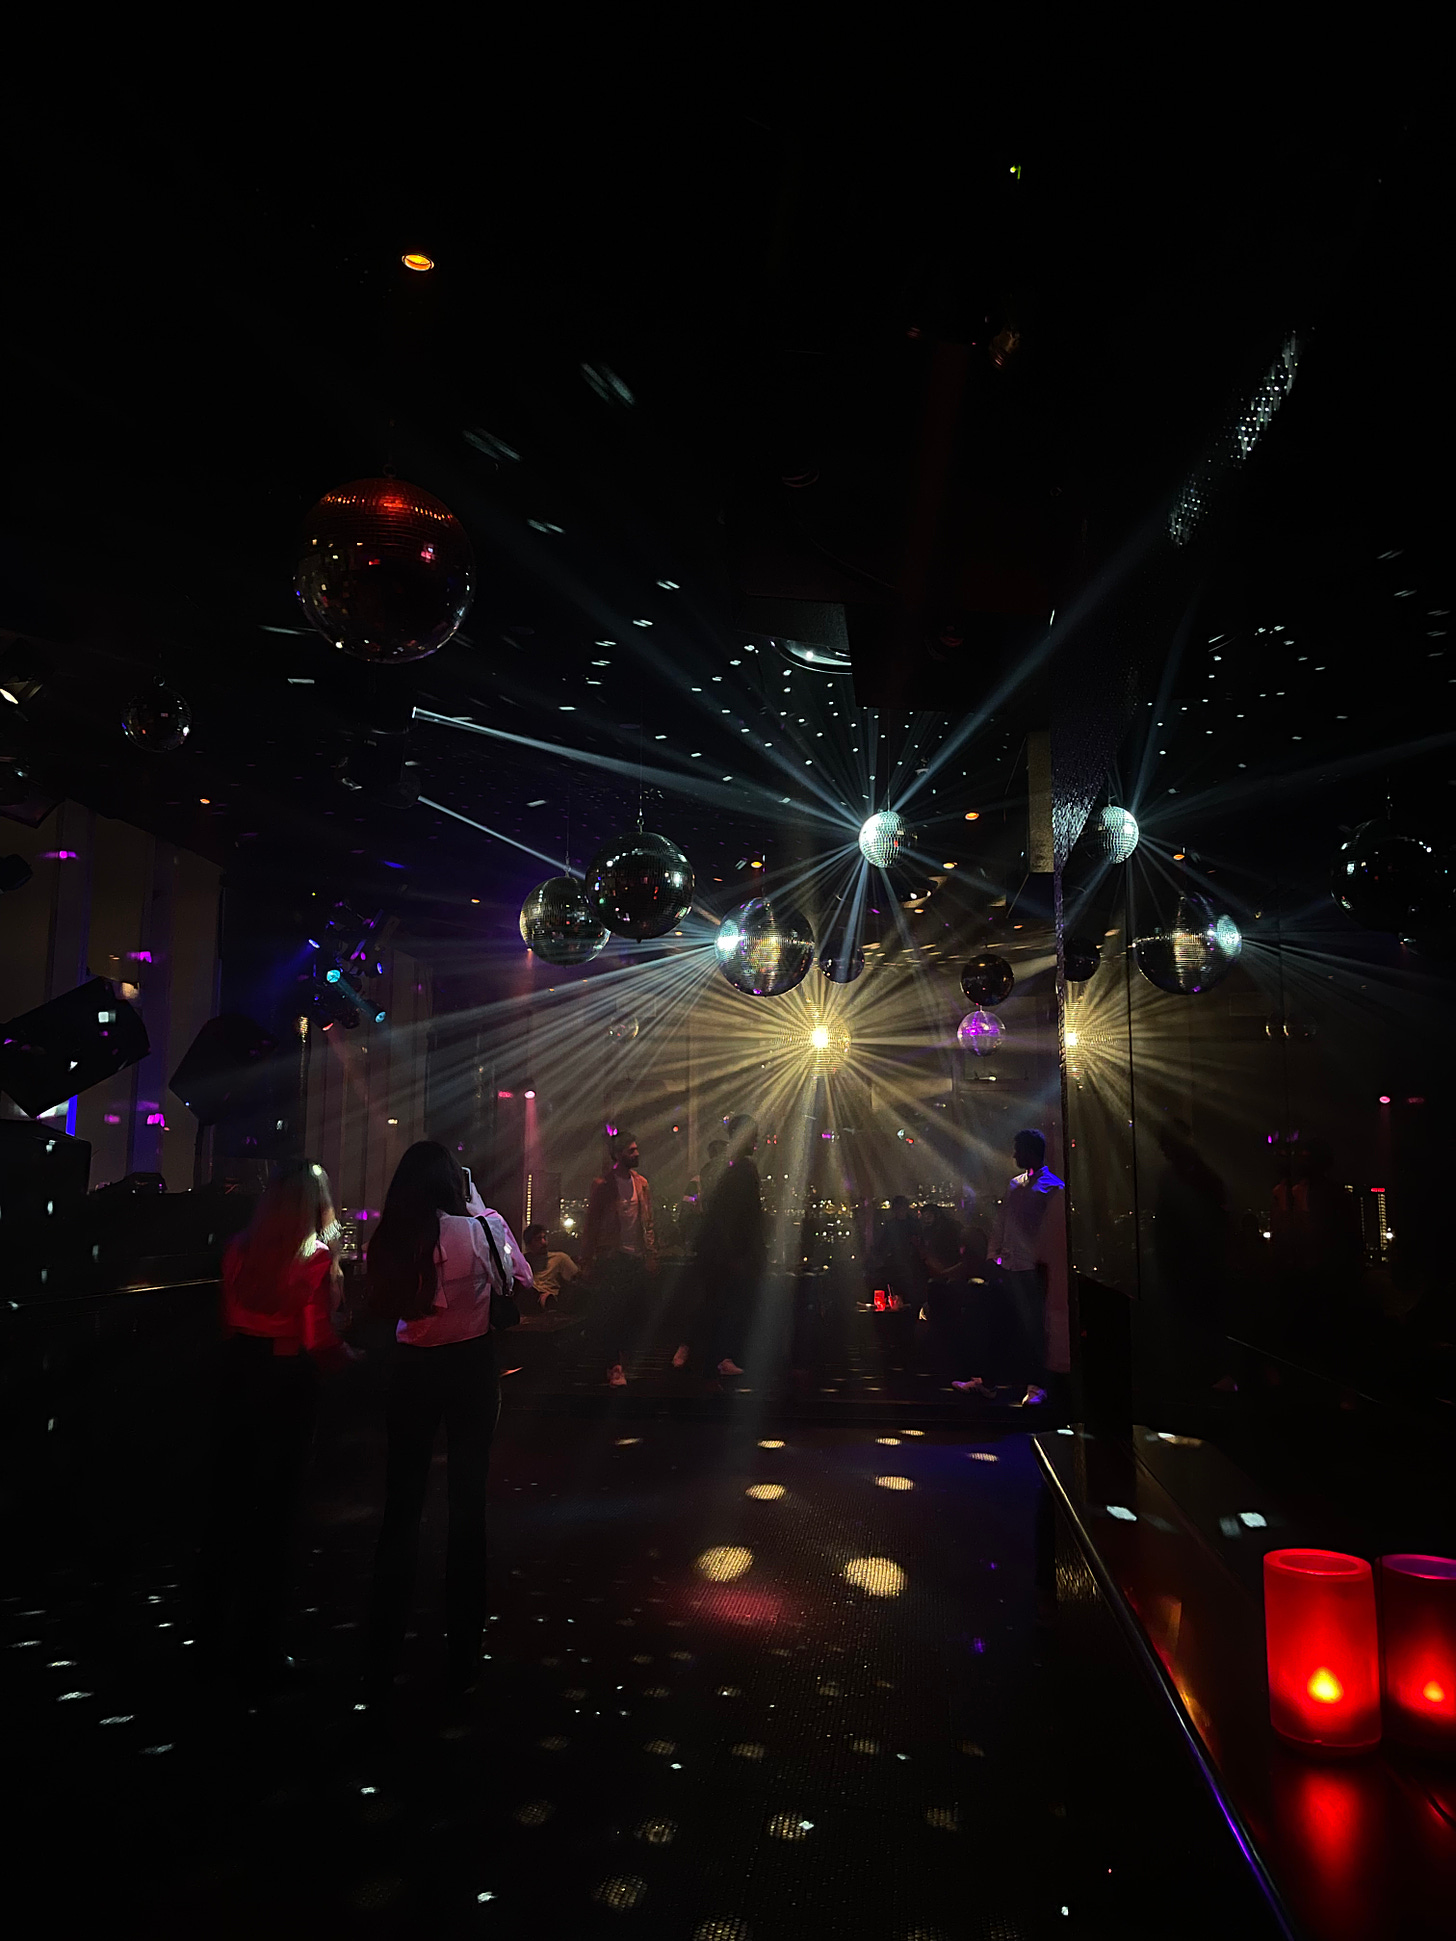 dancefloor lit up with disco balls and mirrors